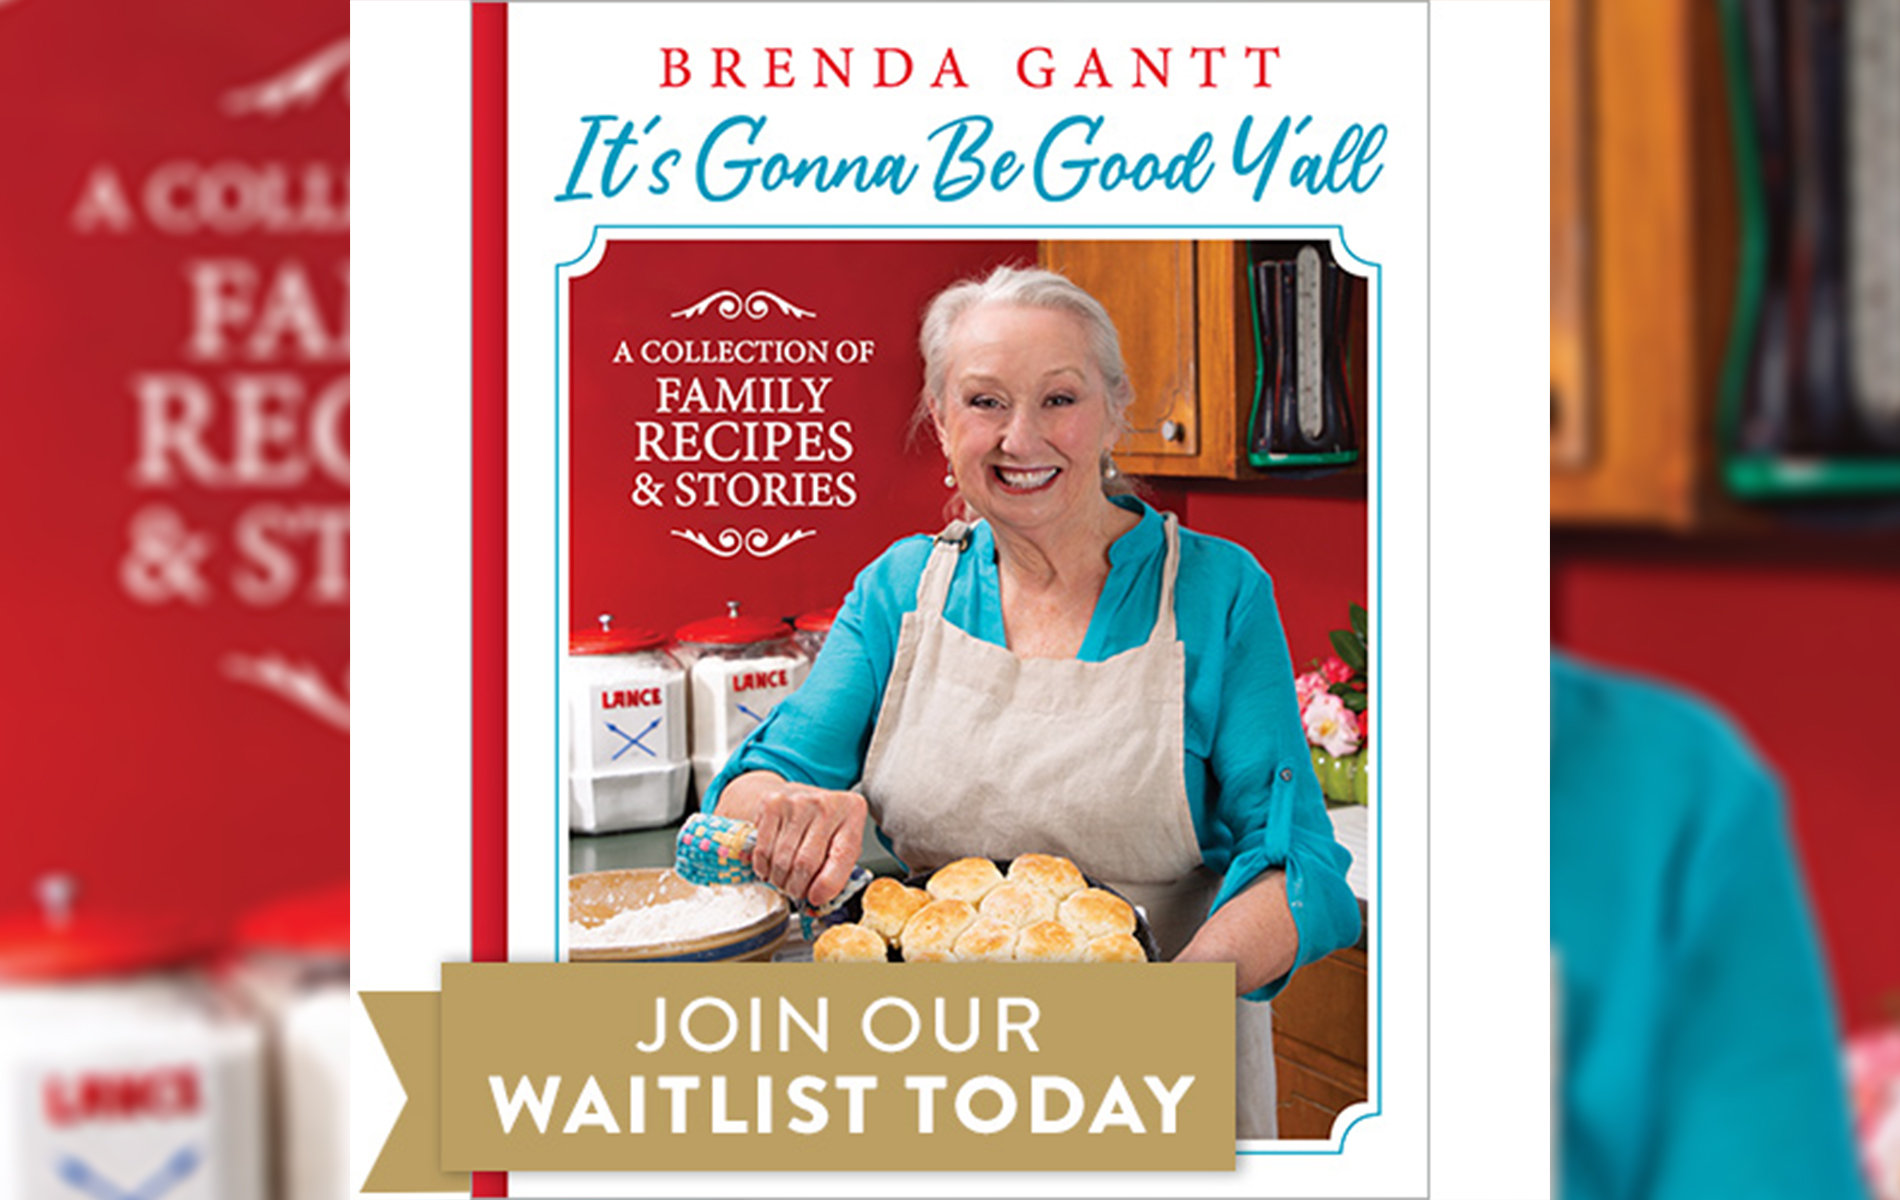 Brenda Gantt Cookbook Recipes - Find Vegetarian Recipes